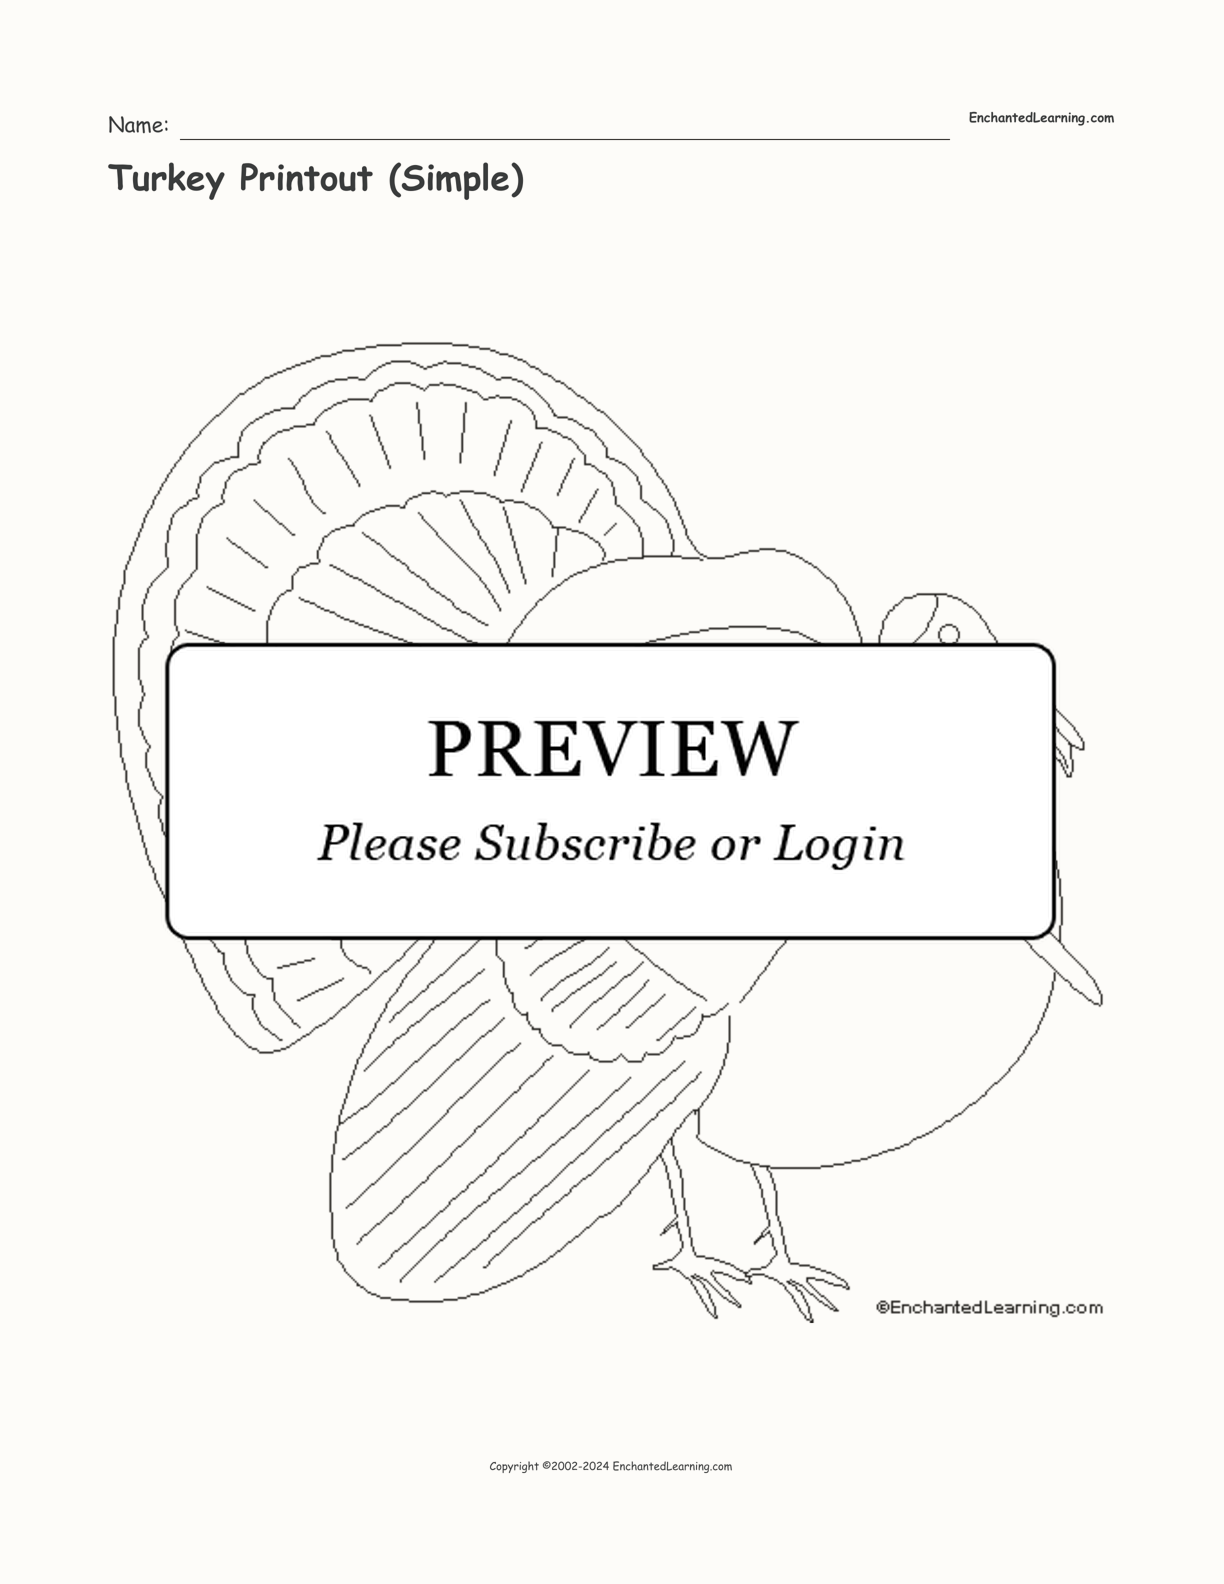 Turkey Printout (Simple) interactive worksheet page 1